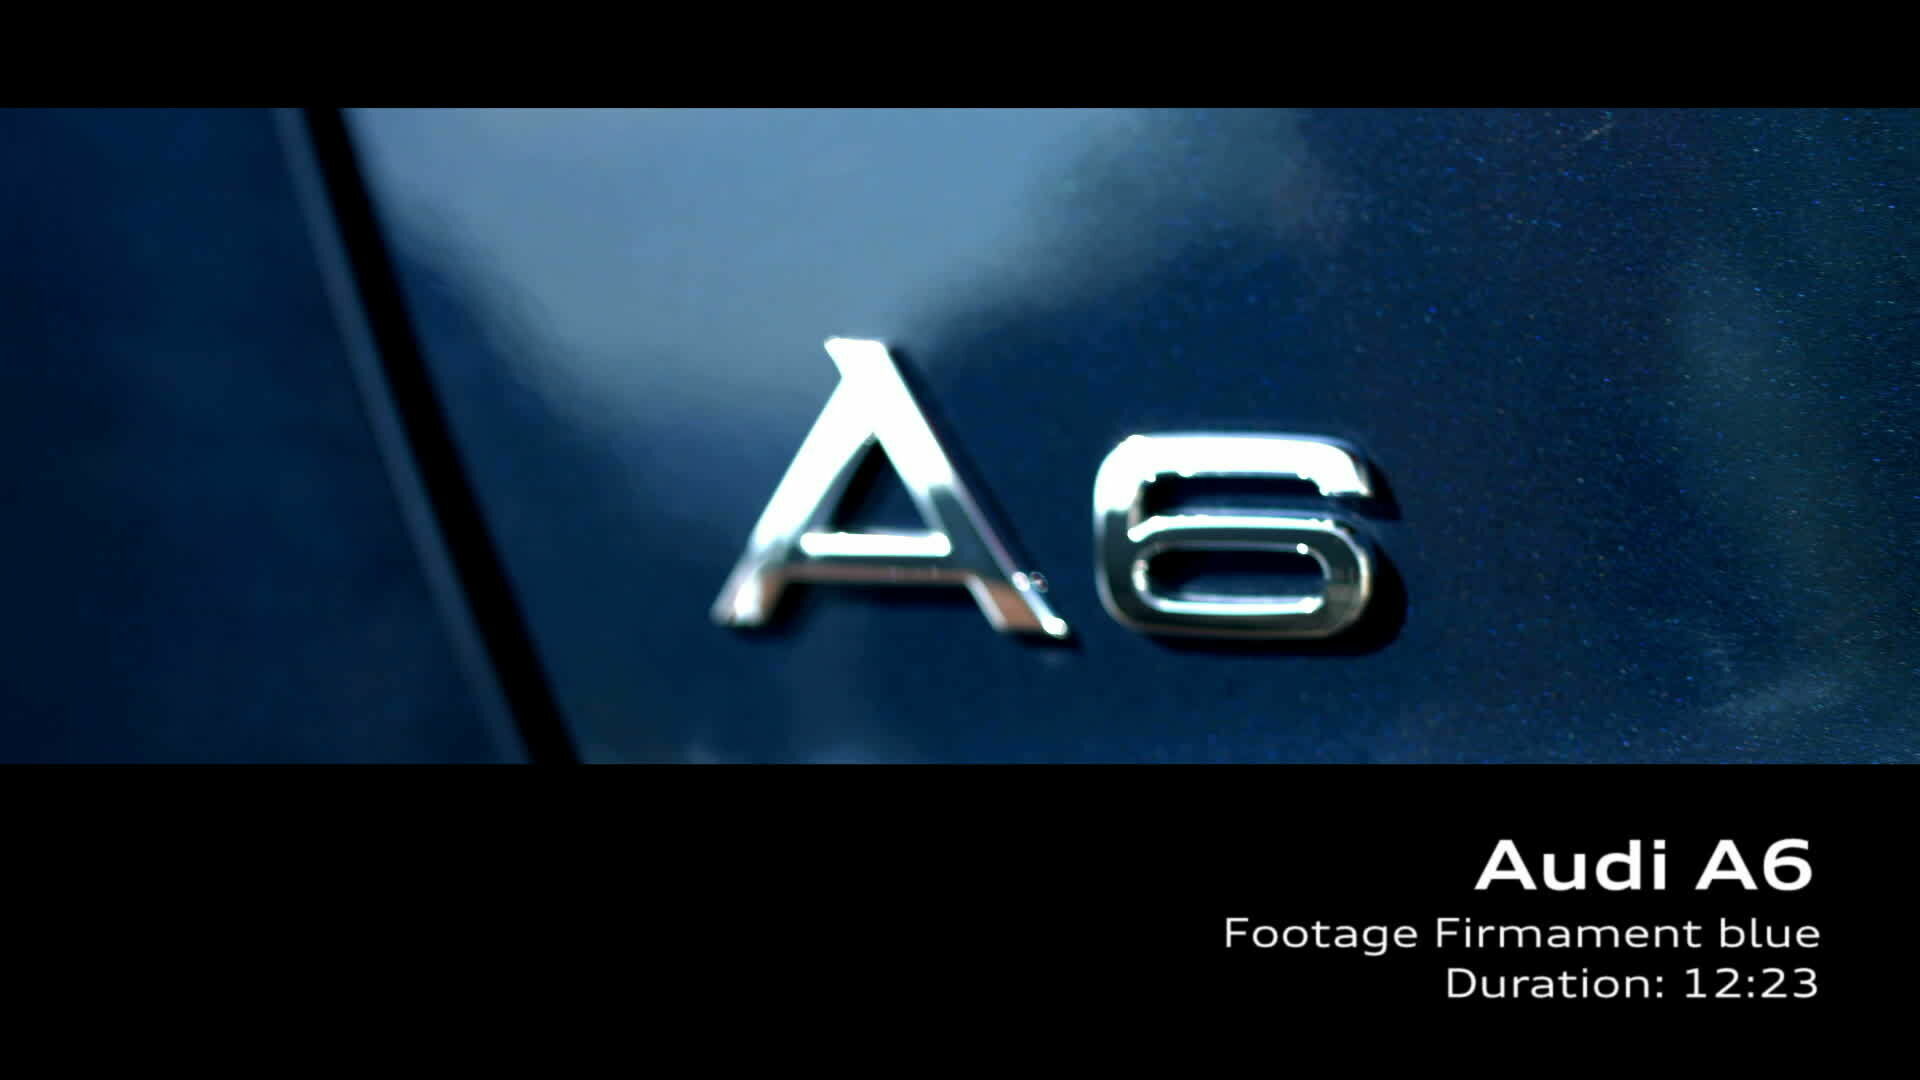 Audi A6 Footage Firmamentblau